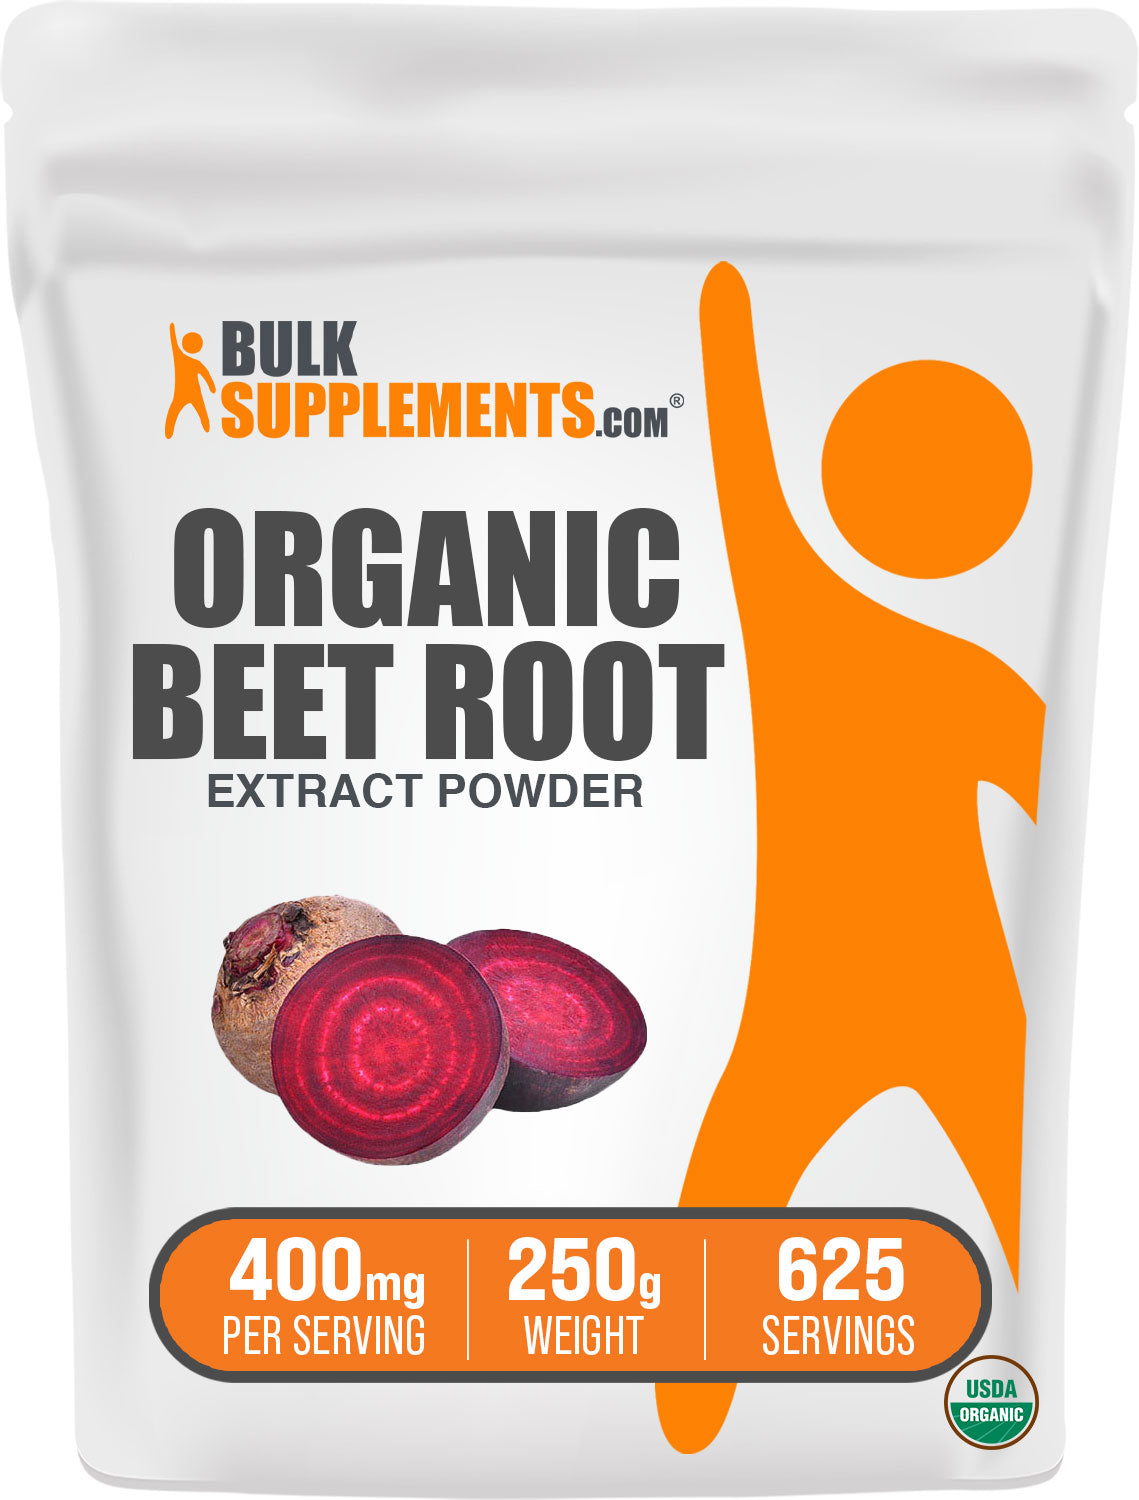 BulkSupplements.com Organic Beet Root Extract Powder 250g Bag